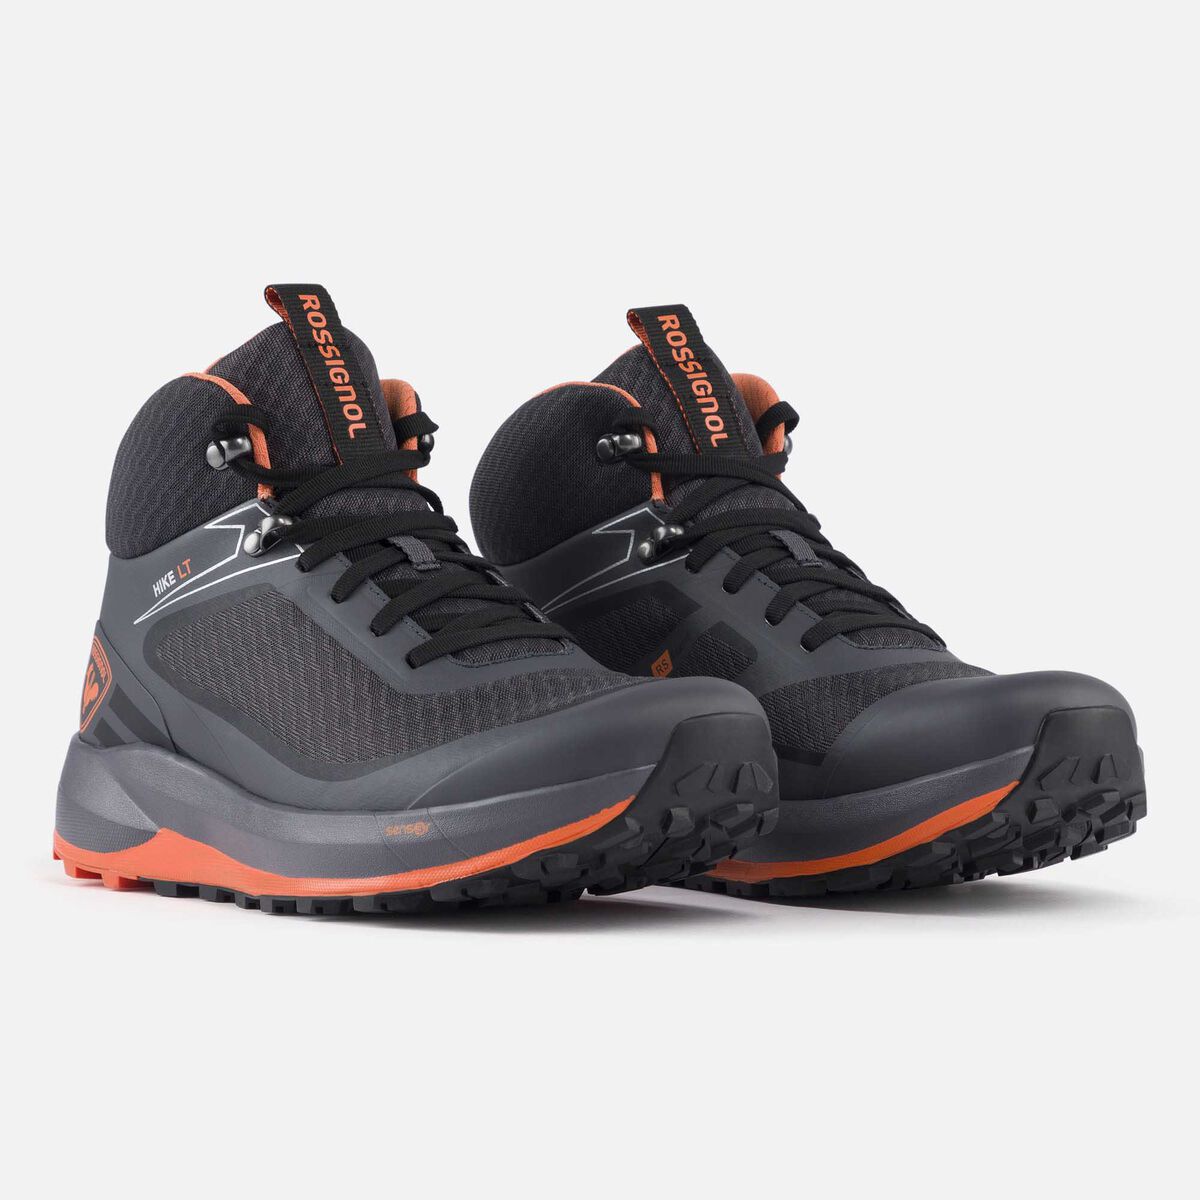 Men's dark grey lightweight hiking shoes